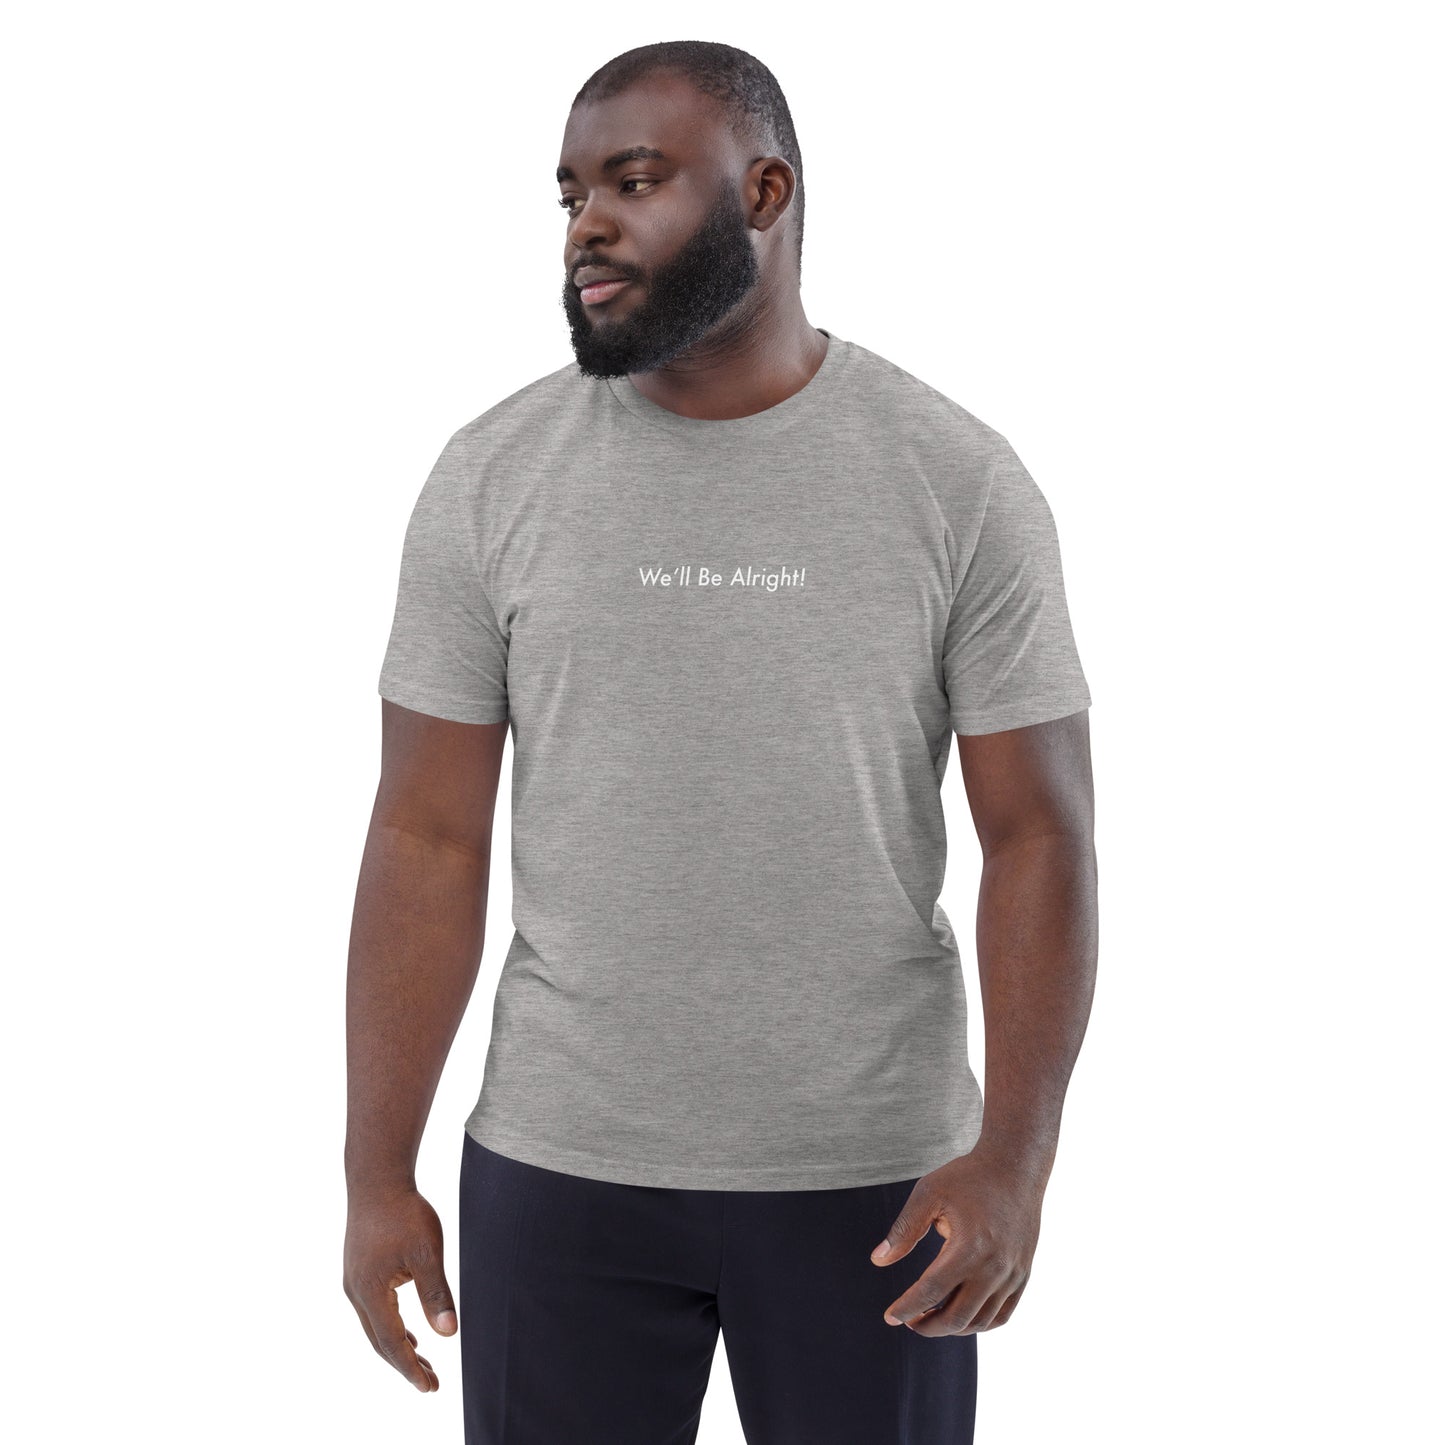 We'll Be Alright! Men's 100% Organic Cotton T-shirt